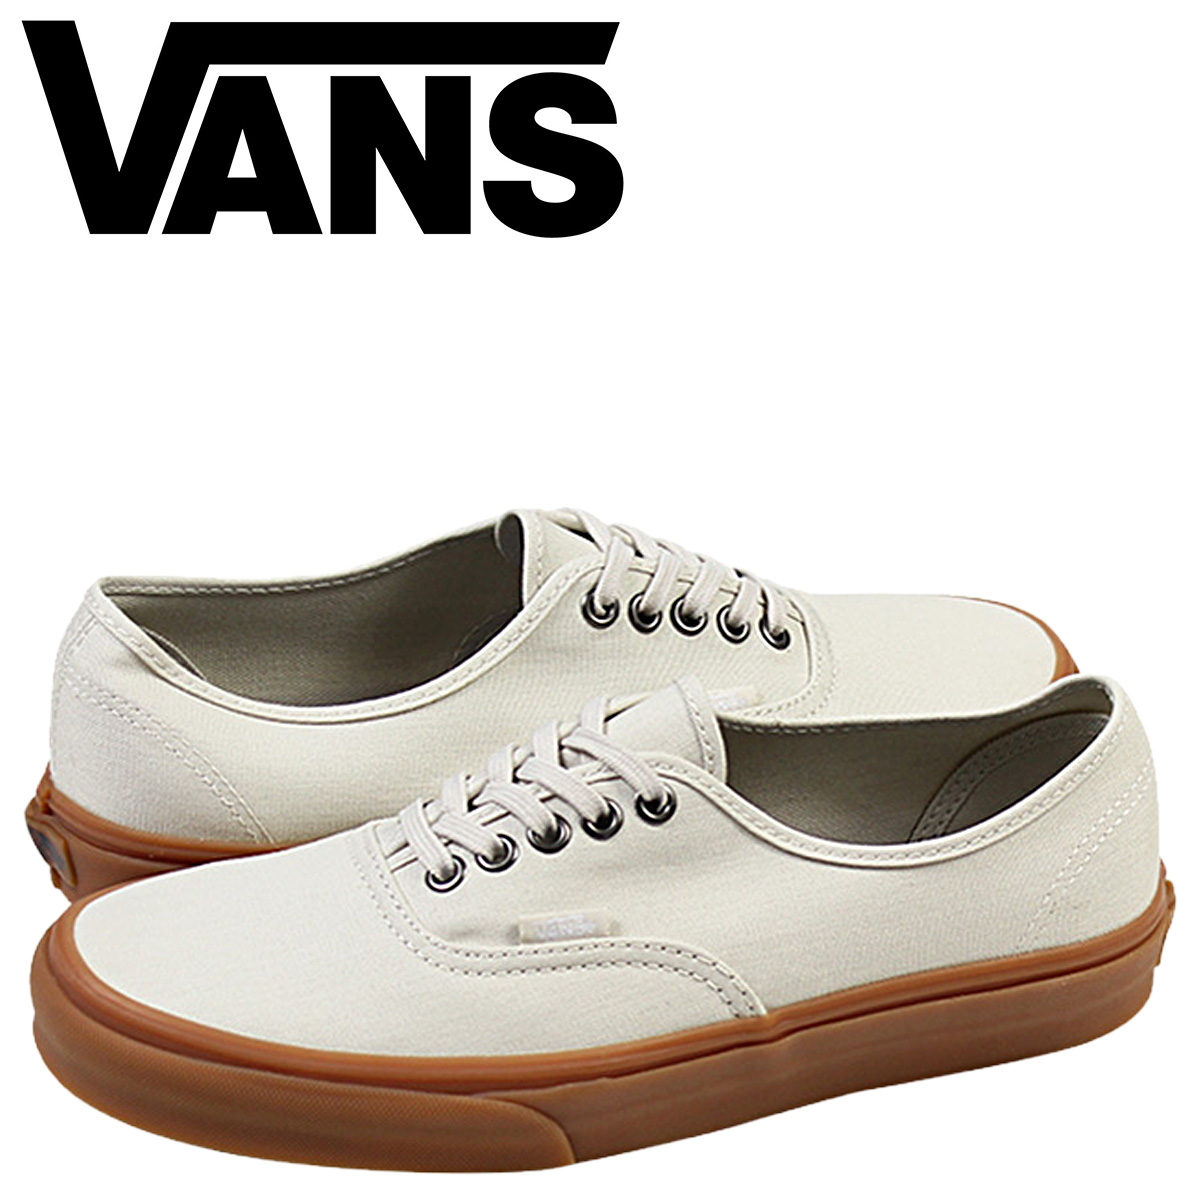 vans white sole